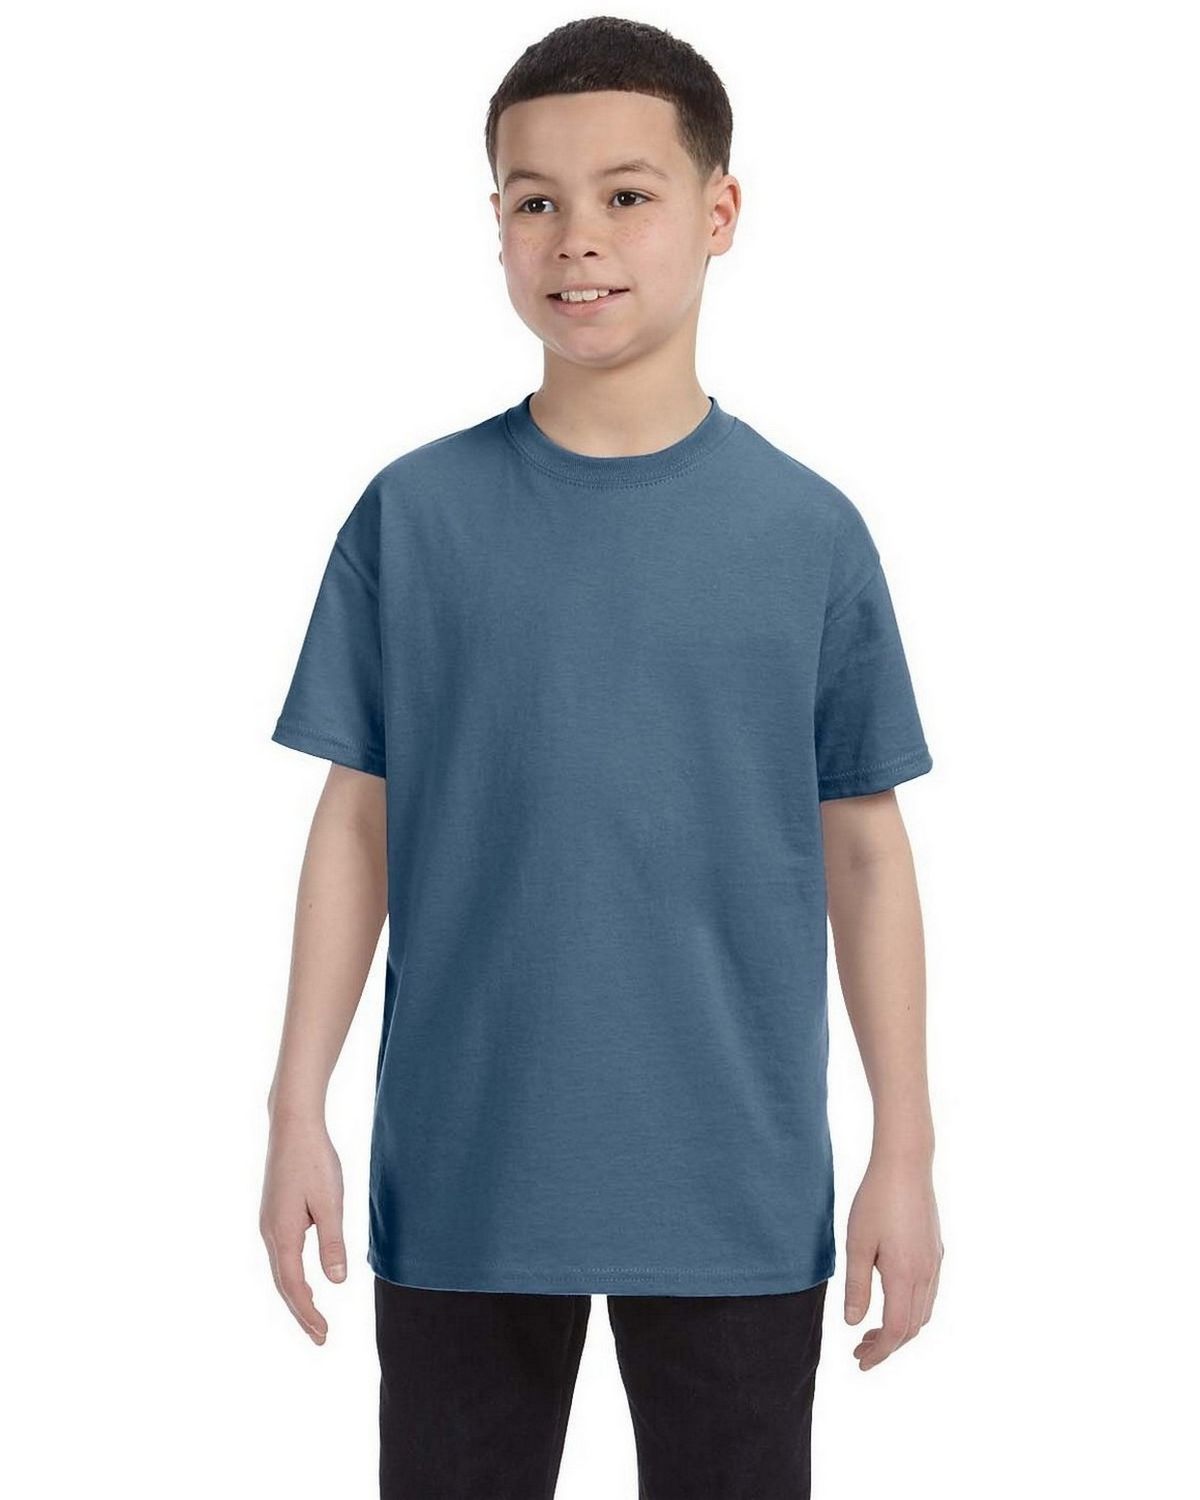 Hanes Tagless T Shirt Size Chart